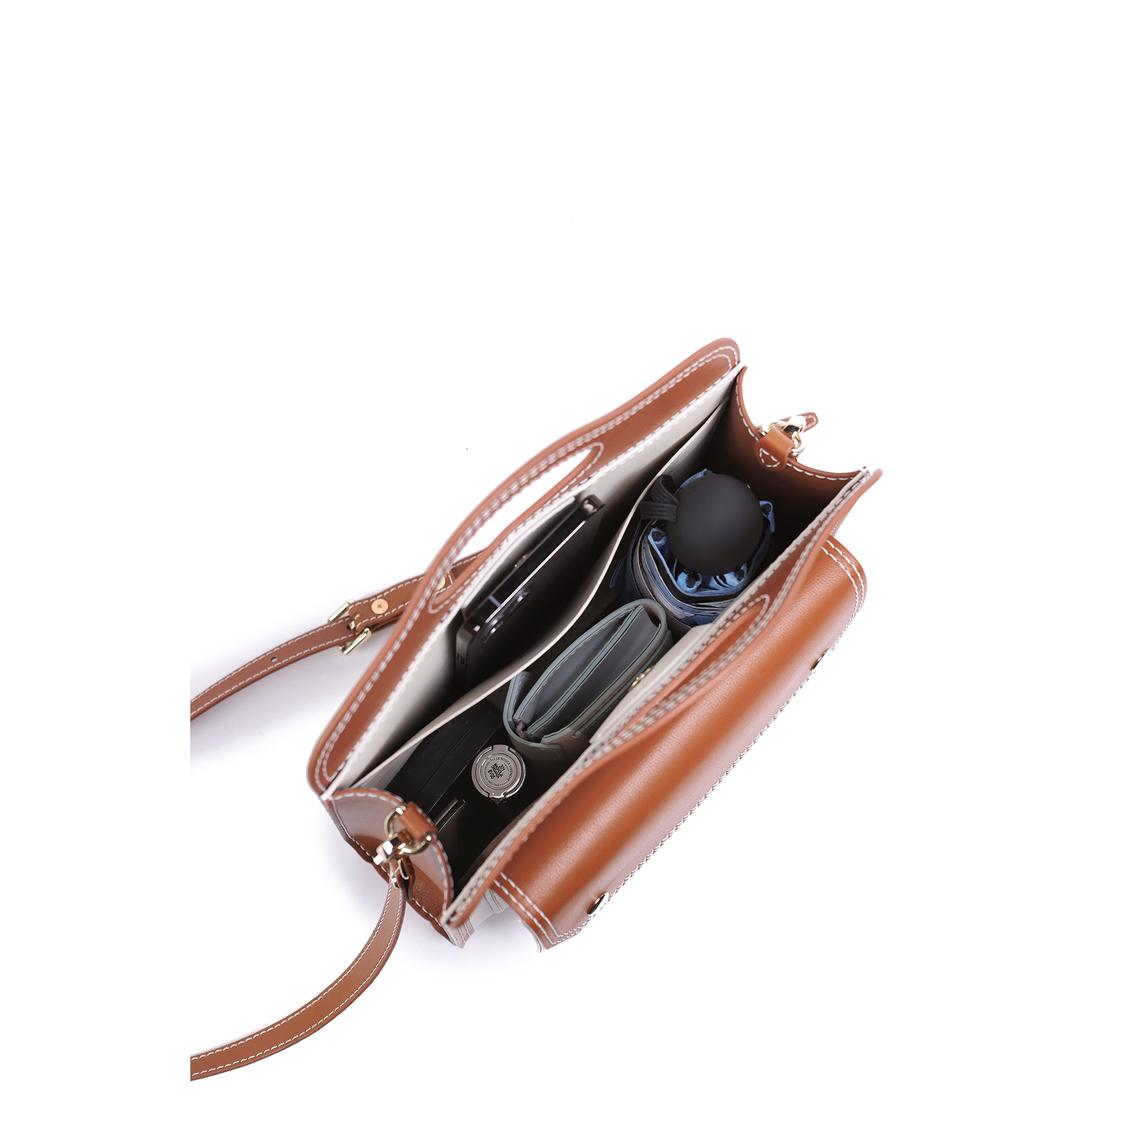 Leather Lady Pocket Crossbody Bag DIY Kit